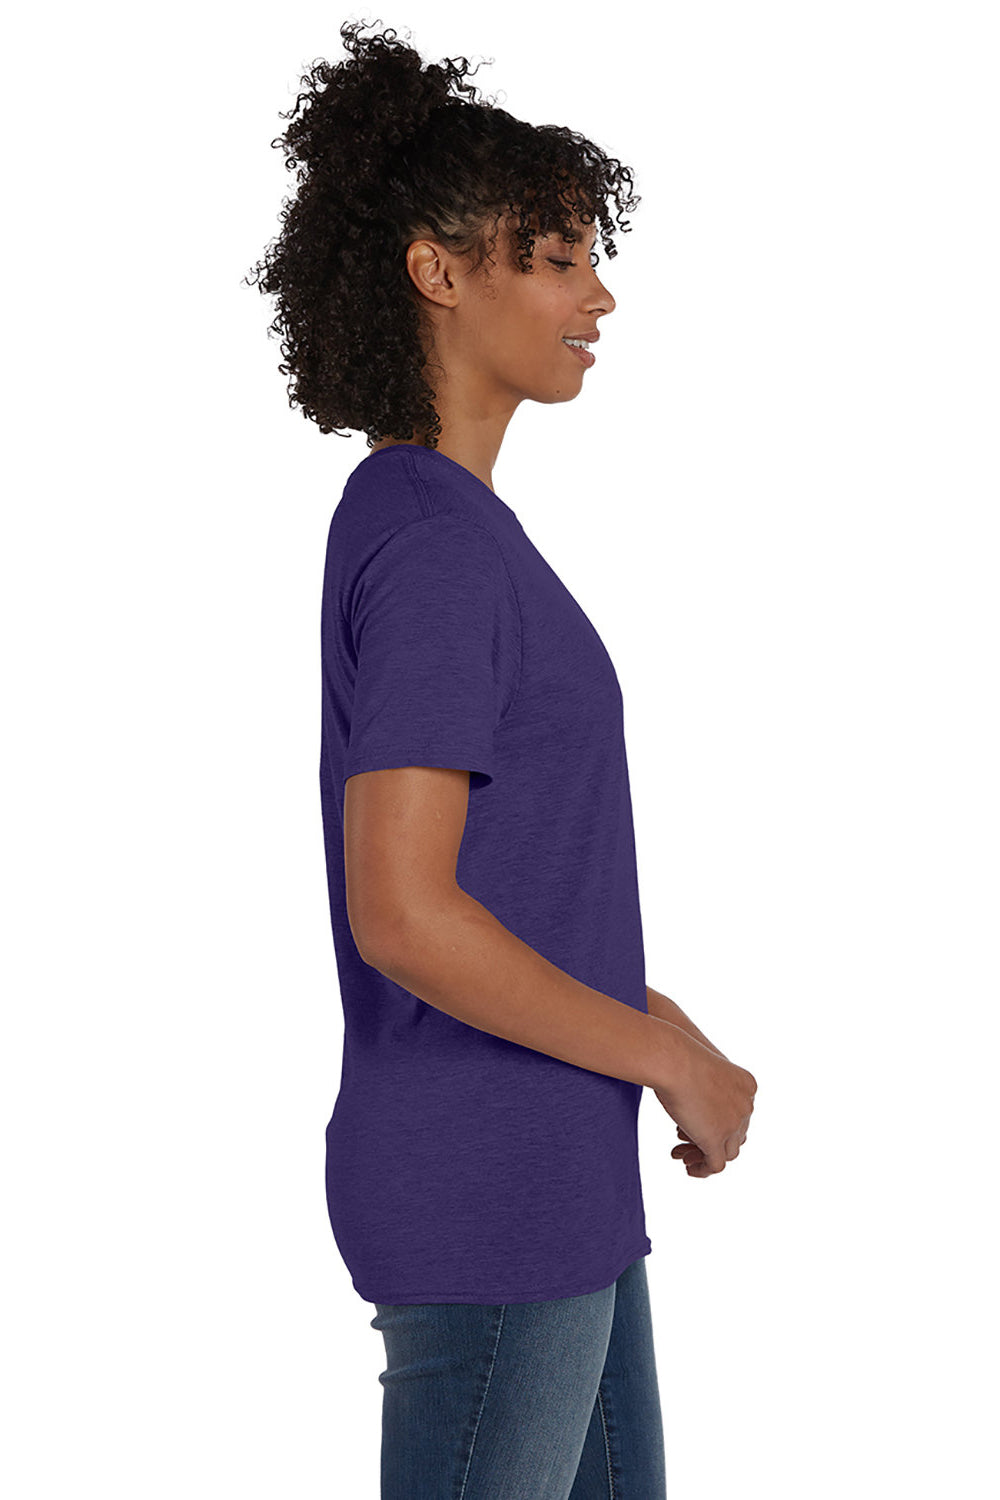 Hanes 4980 Mens Nano-T Short Sleeve Crewneck T-Shirt Heather Grape Smash Purple SIde